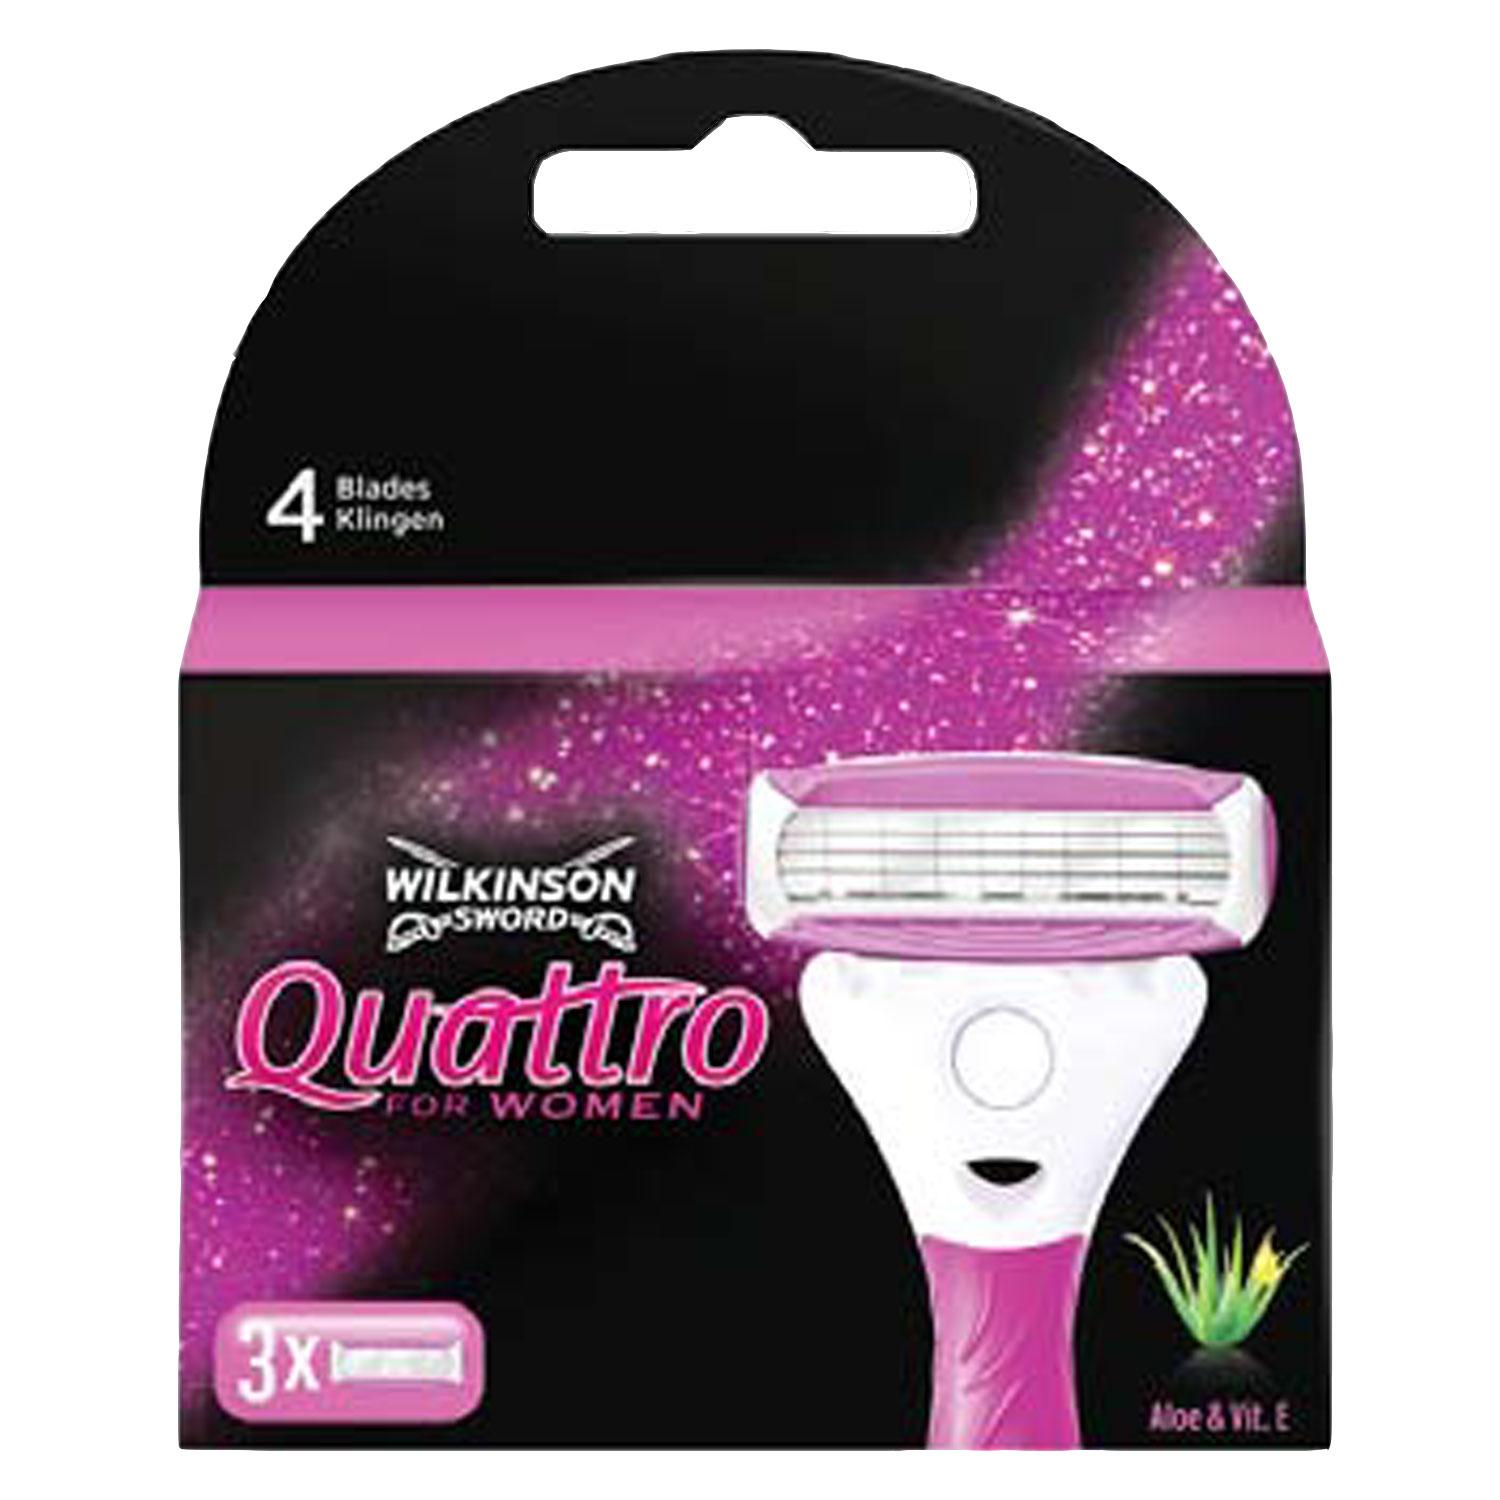 Quattro for Women - Refill Blades